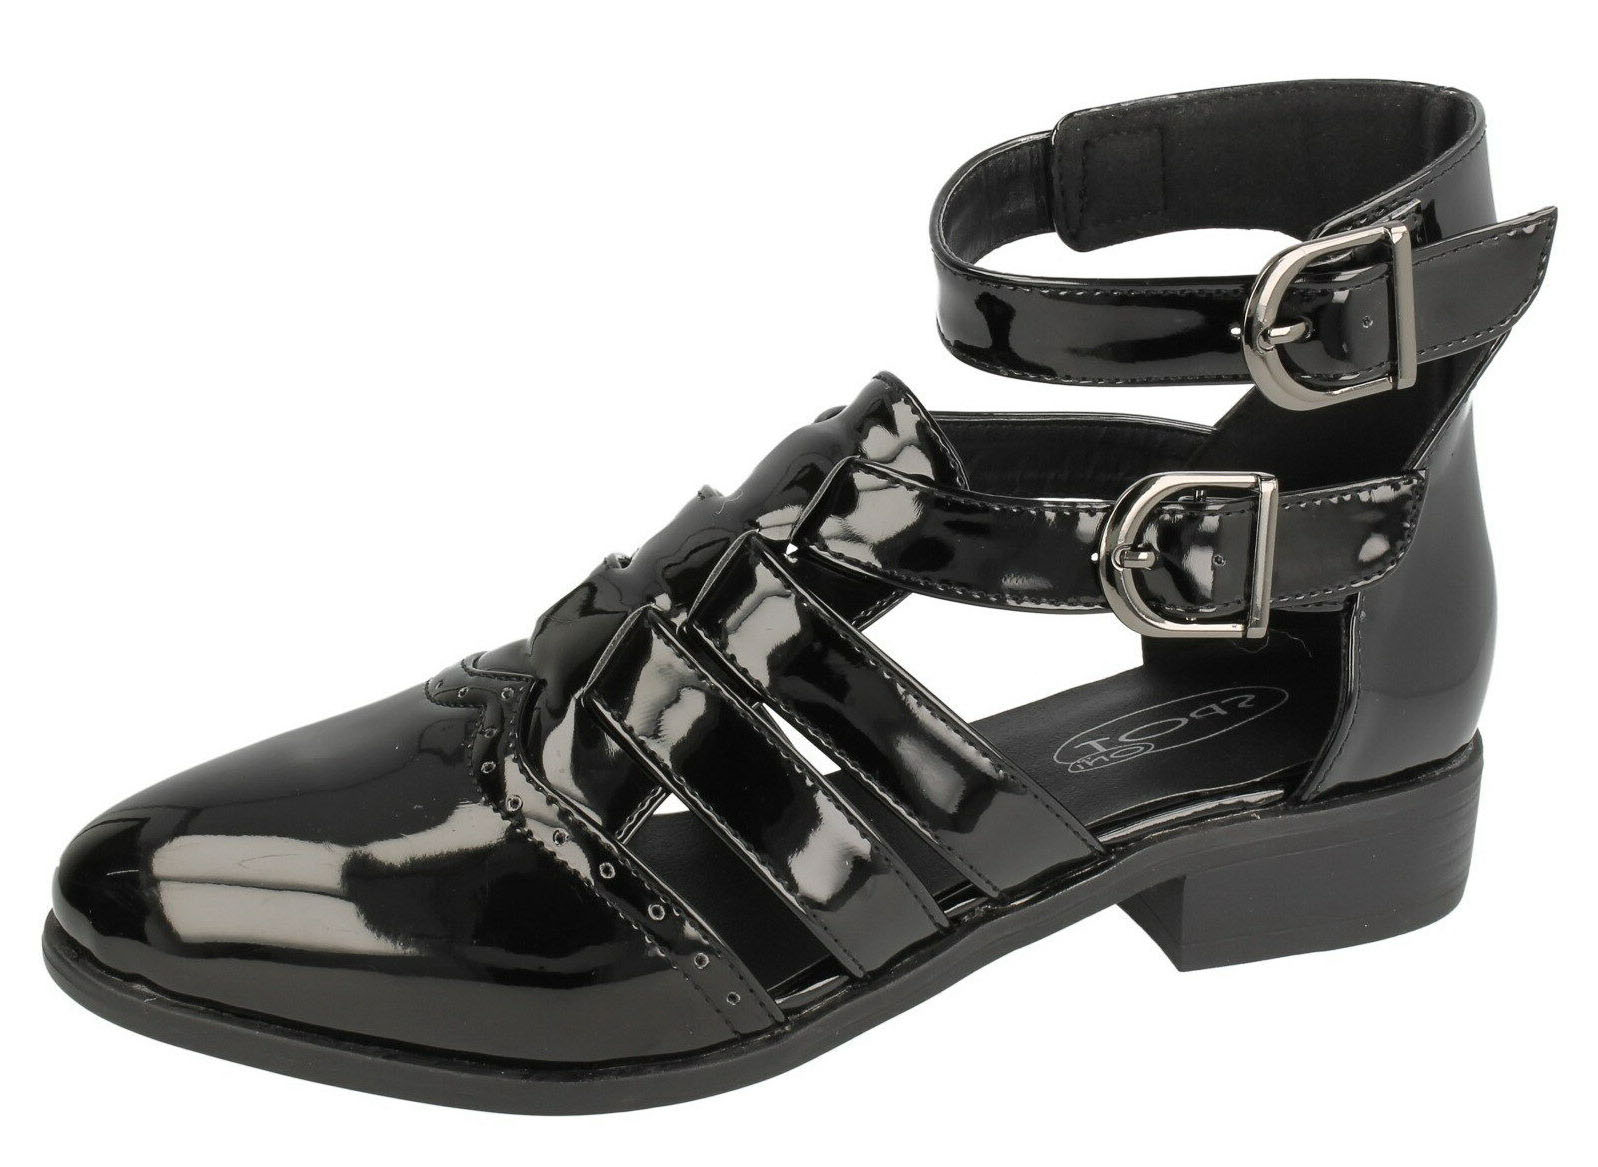 black patent low heel boots